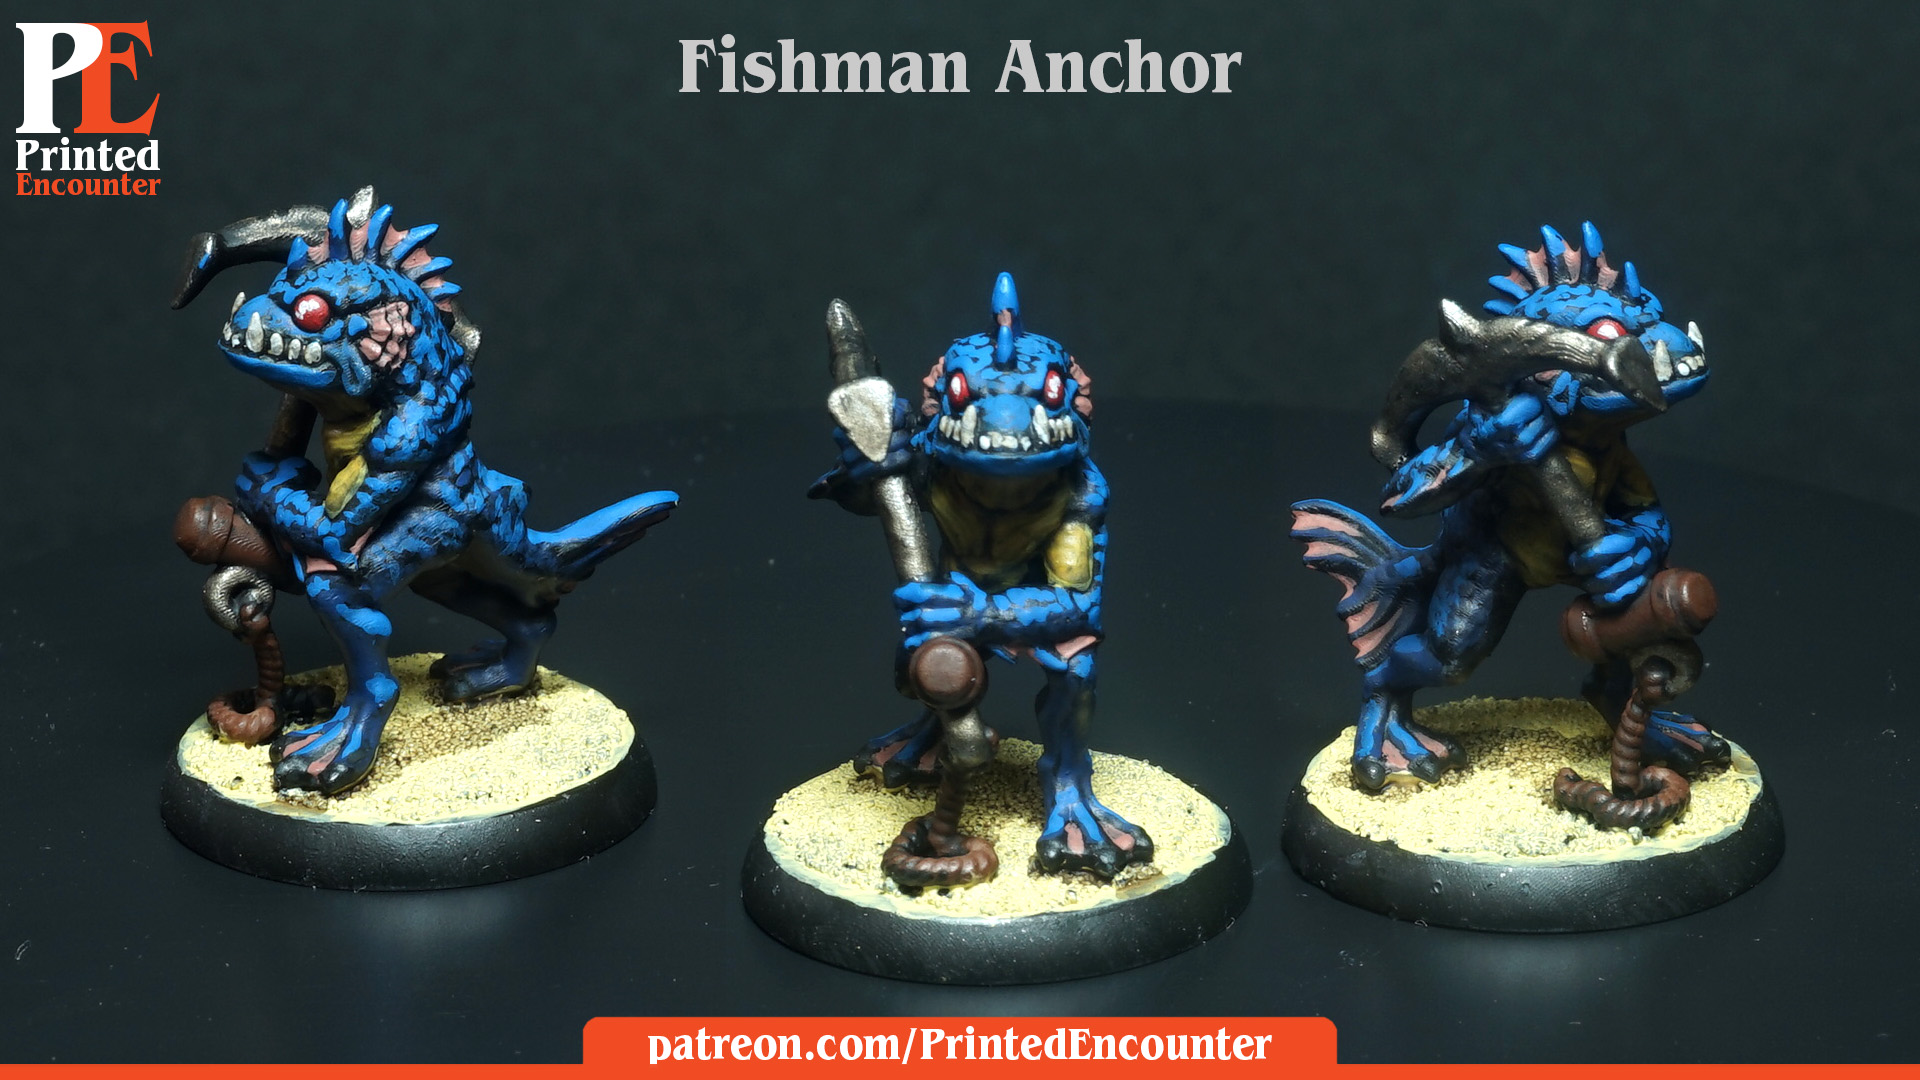 Fishman Anchor